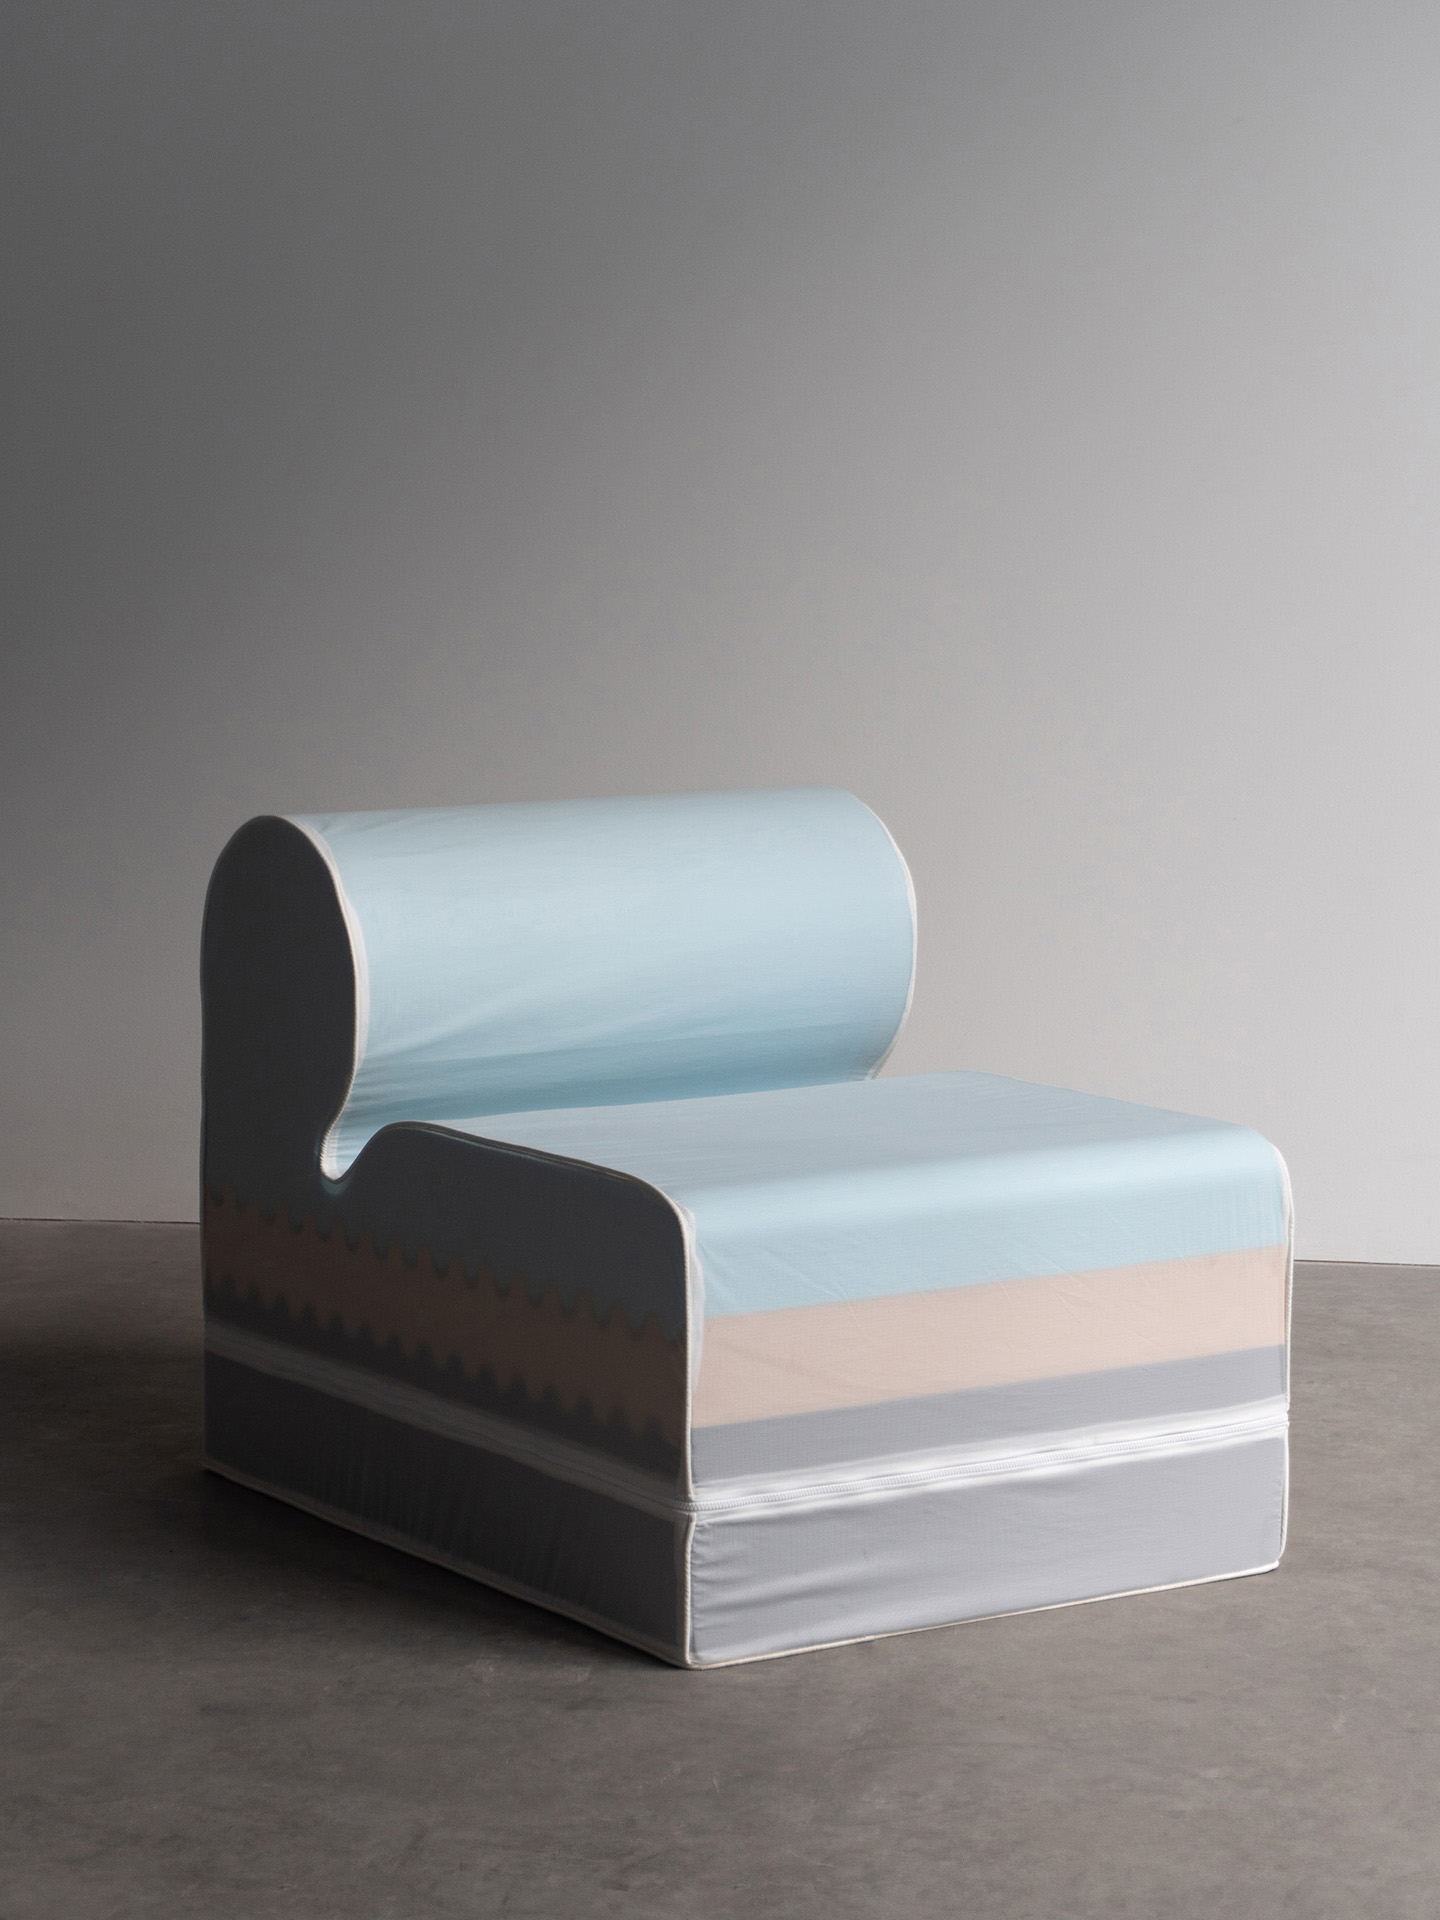 Furniture Case Study - Polyurethane Foam Association